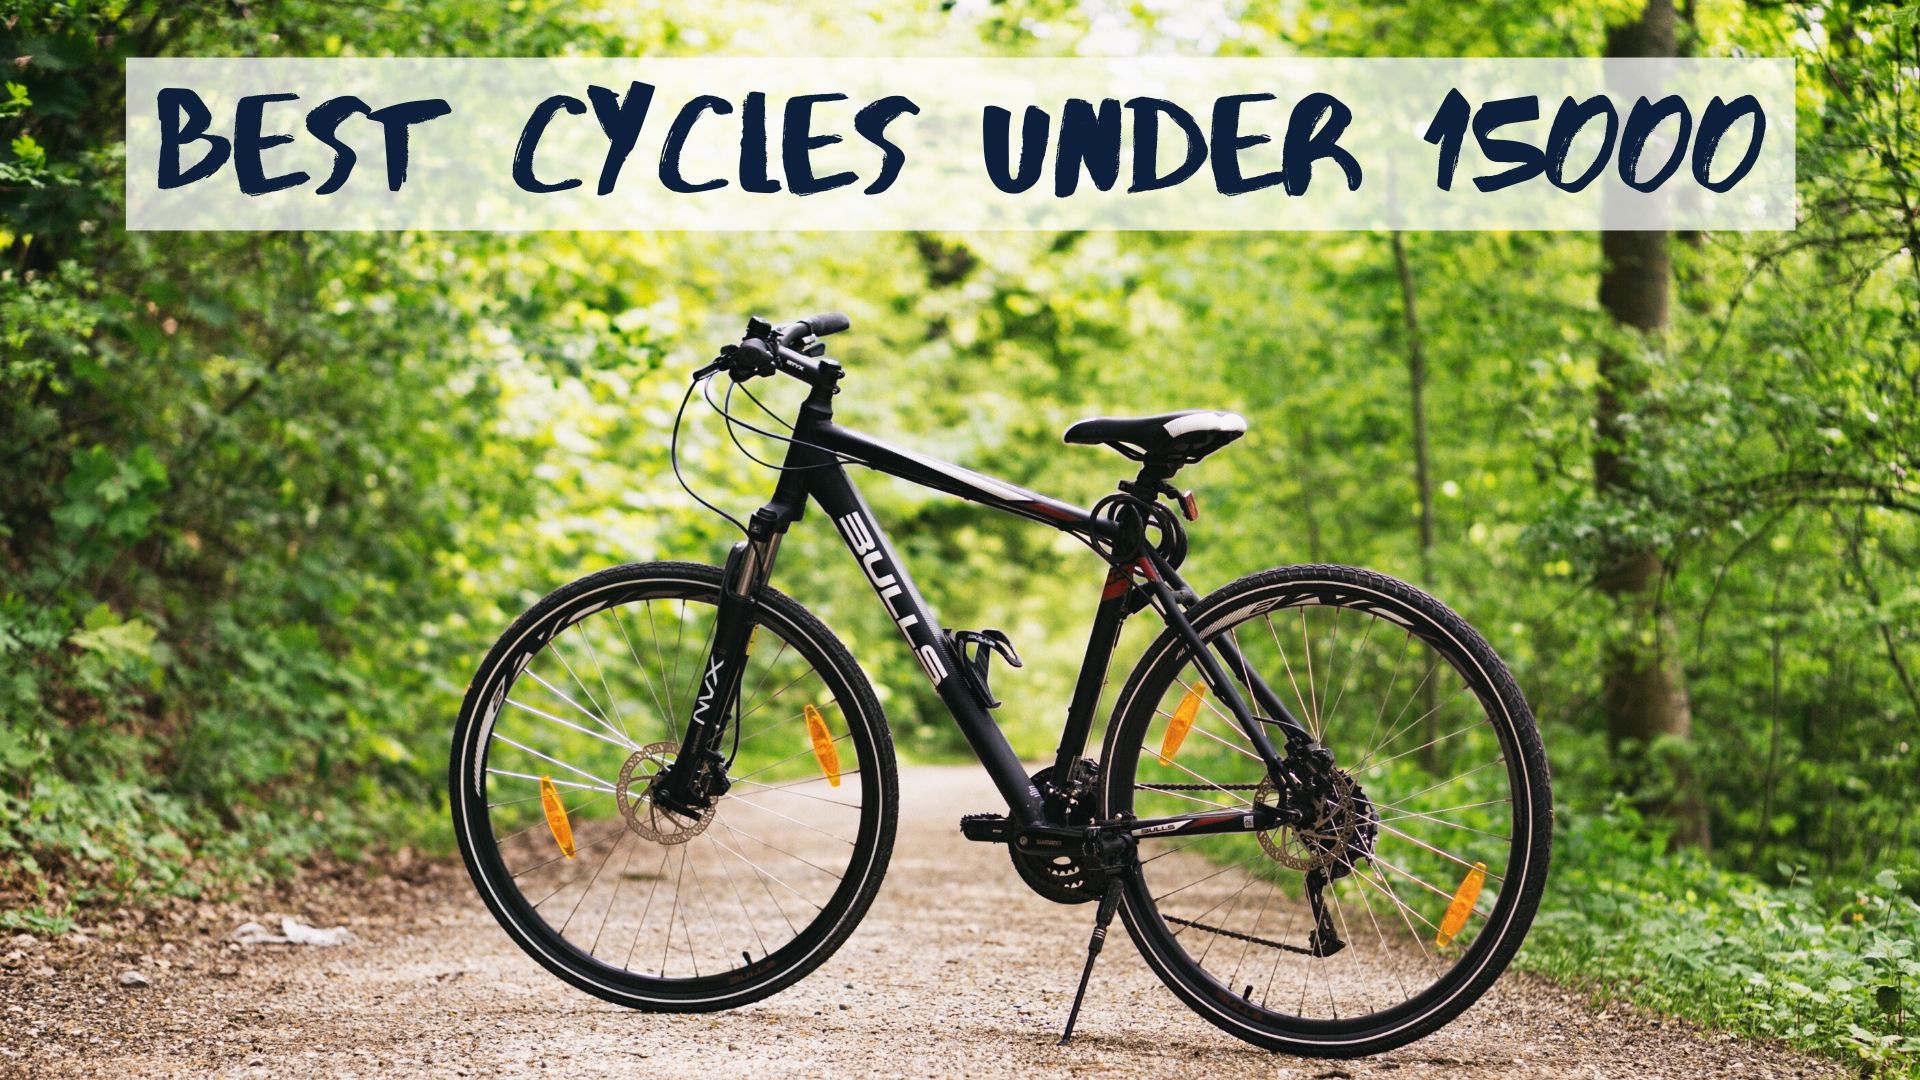 roadeo gear cycles under 10000